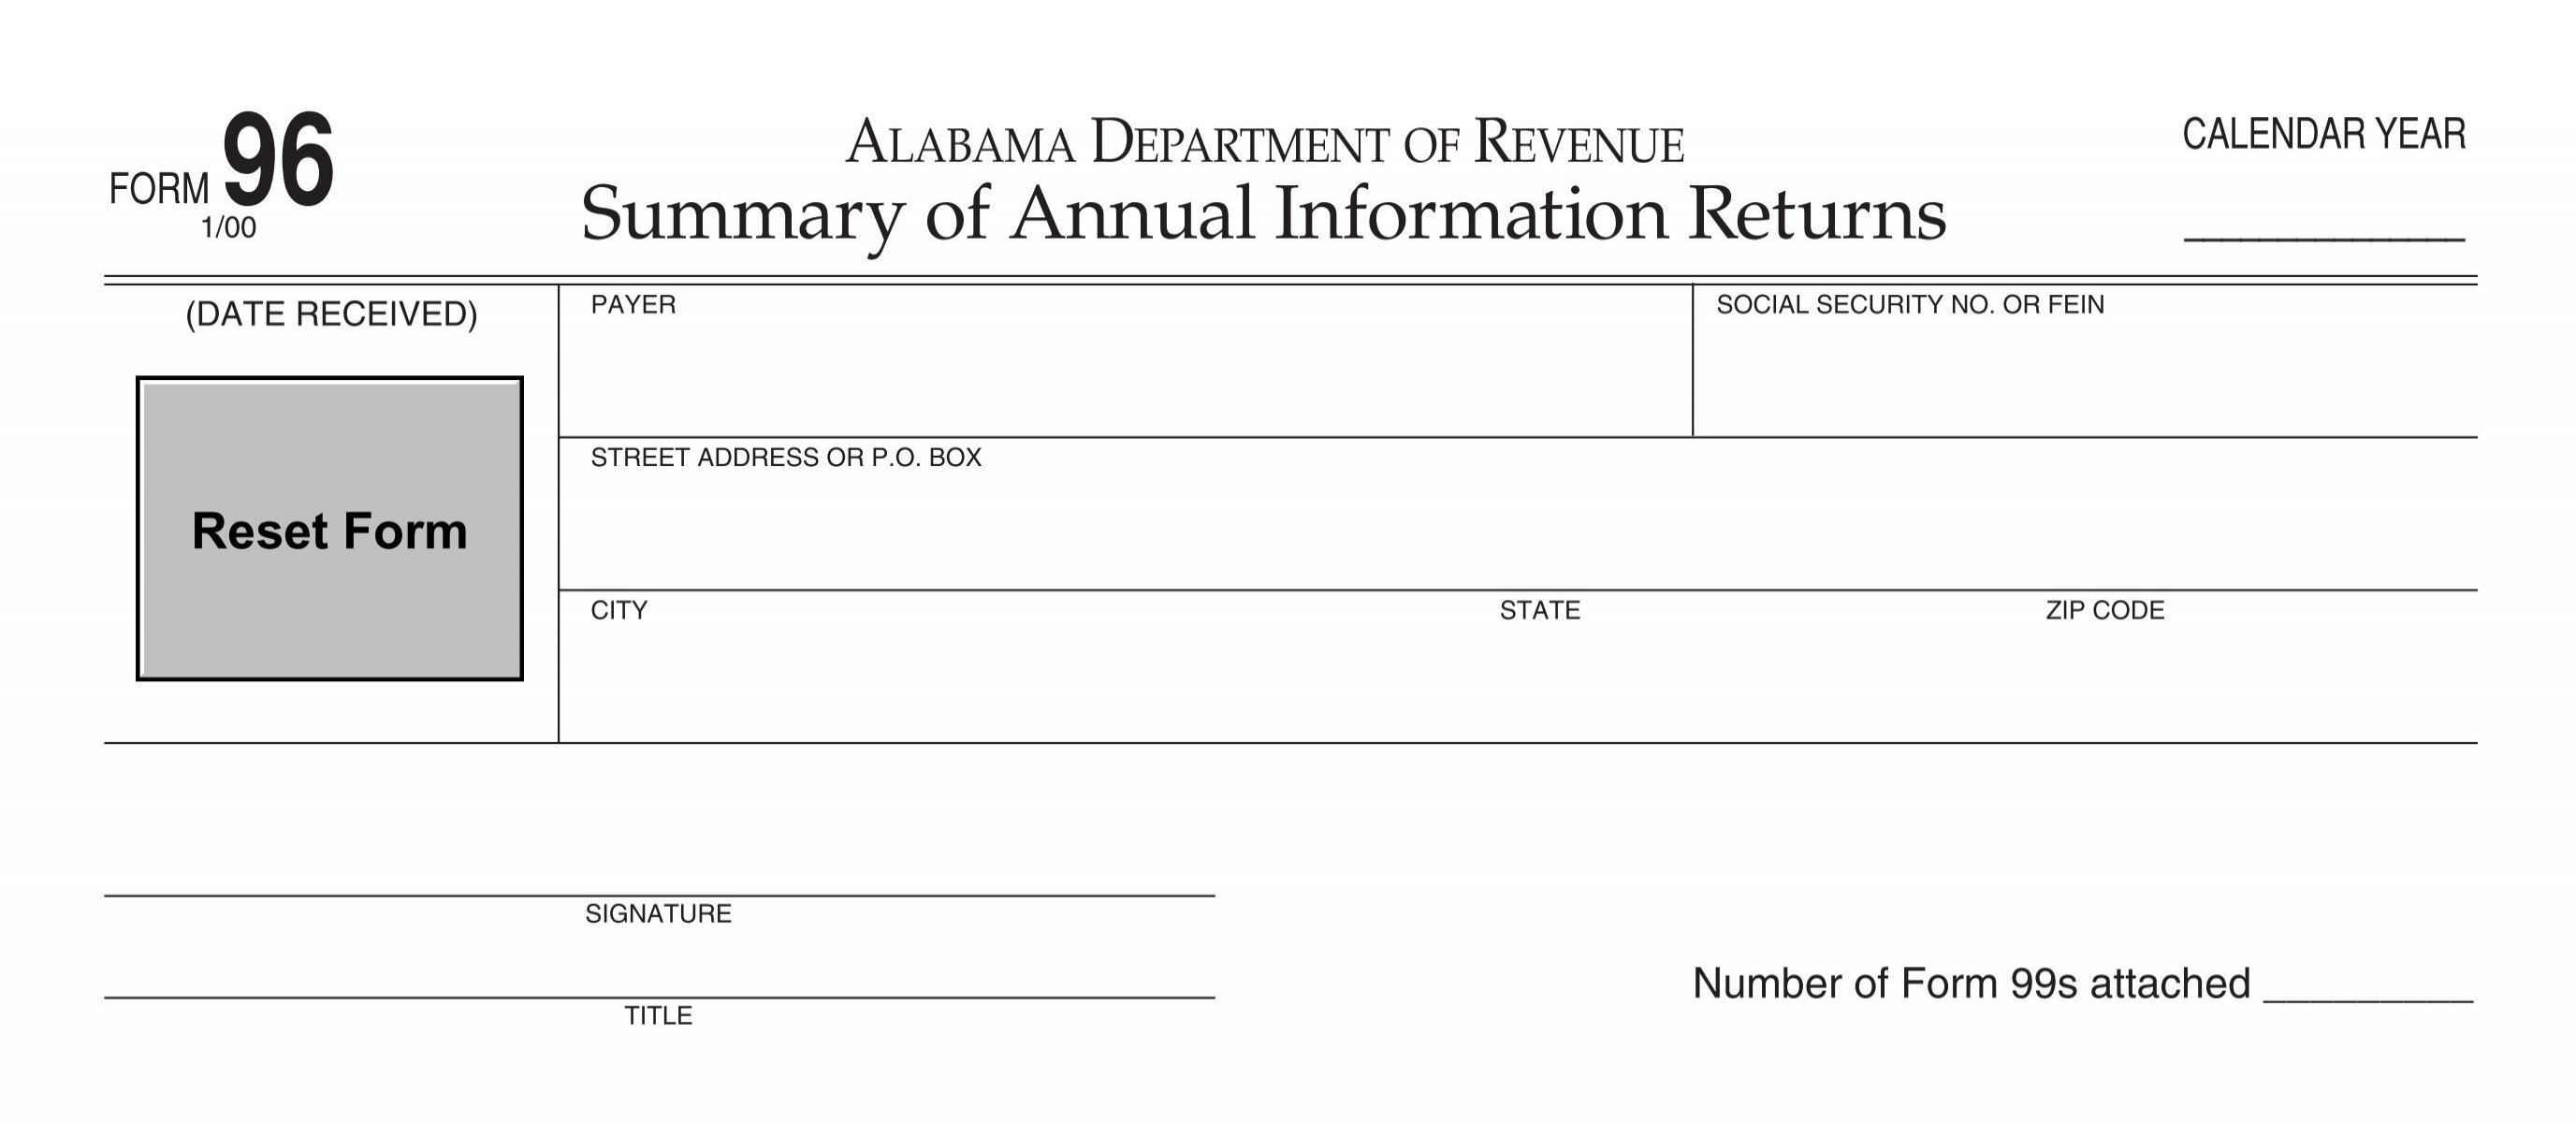 Form 96 - Alabama Department of Revenue